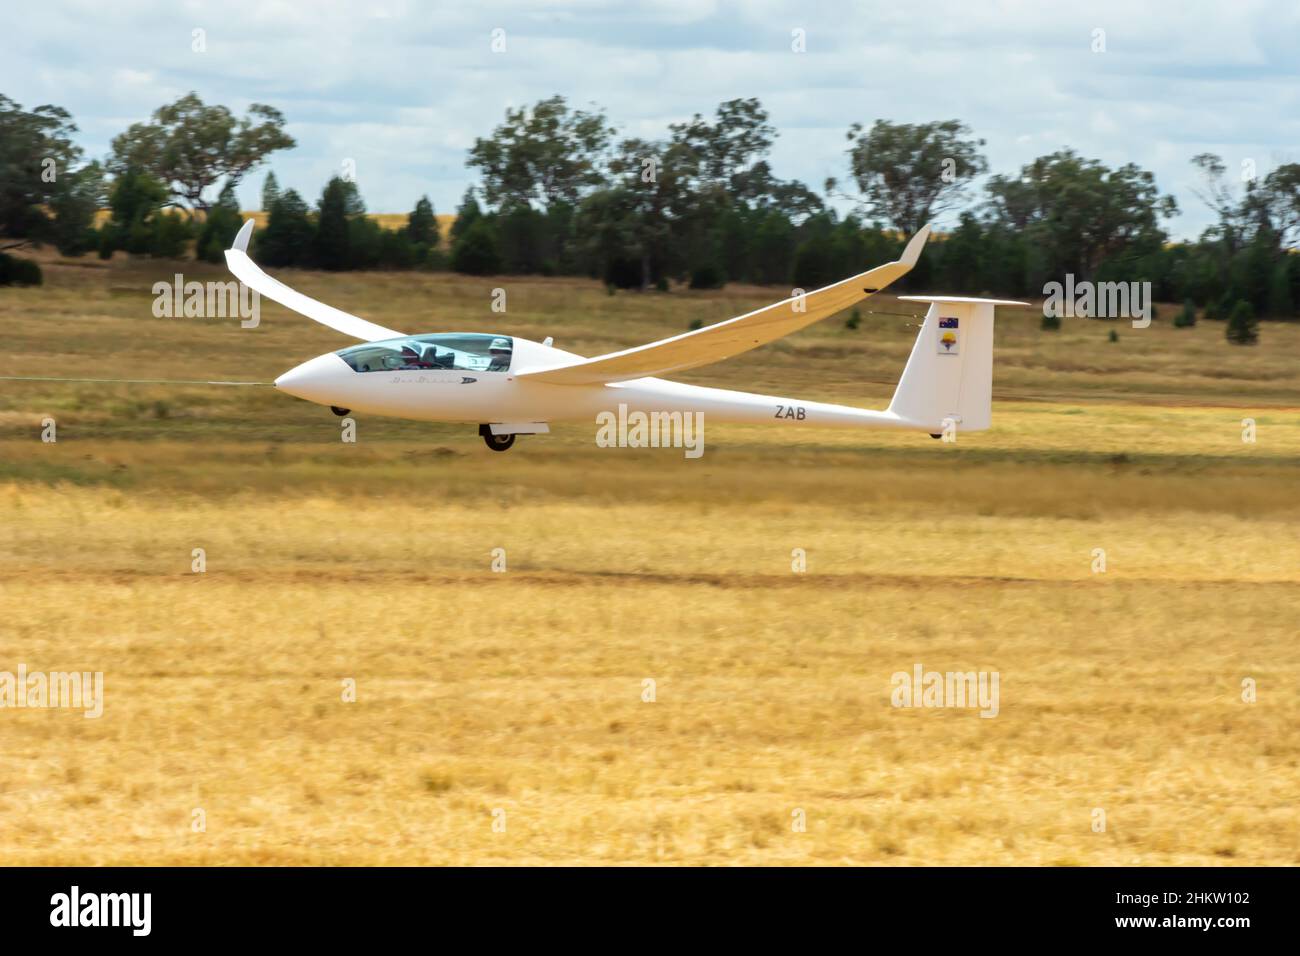 Schepp-Hirth Duo Discus T Sailplane taking off at Lake Keepir airfield Gunnedah Australia.gliders Stock Photo